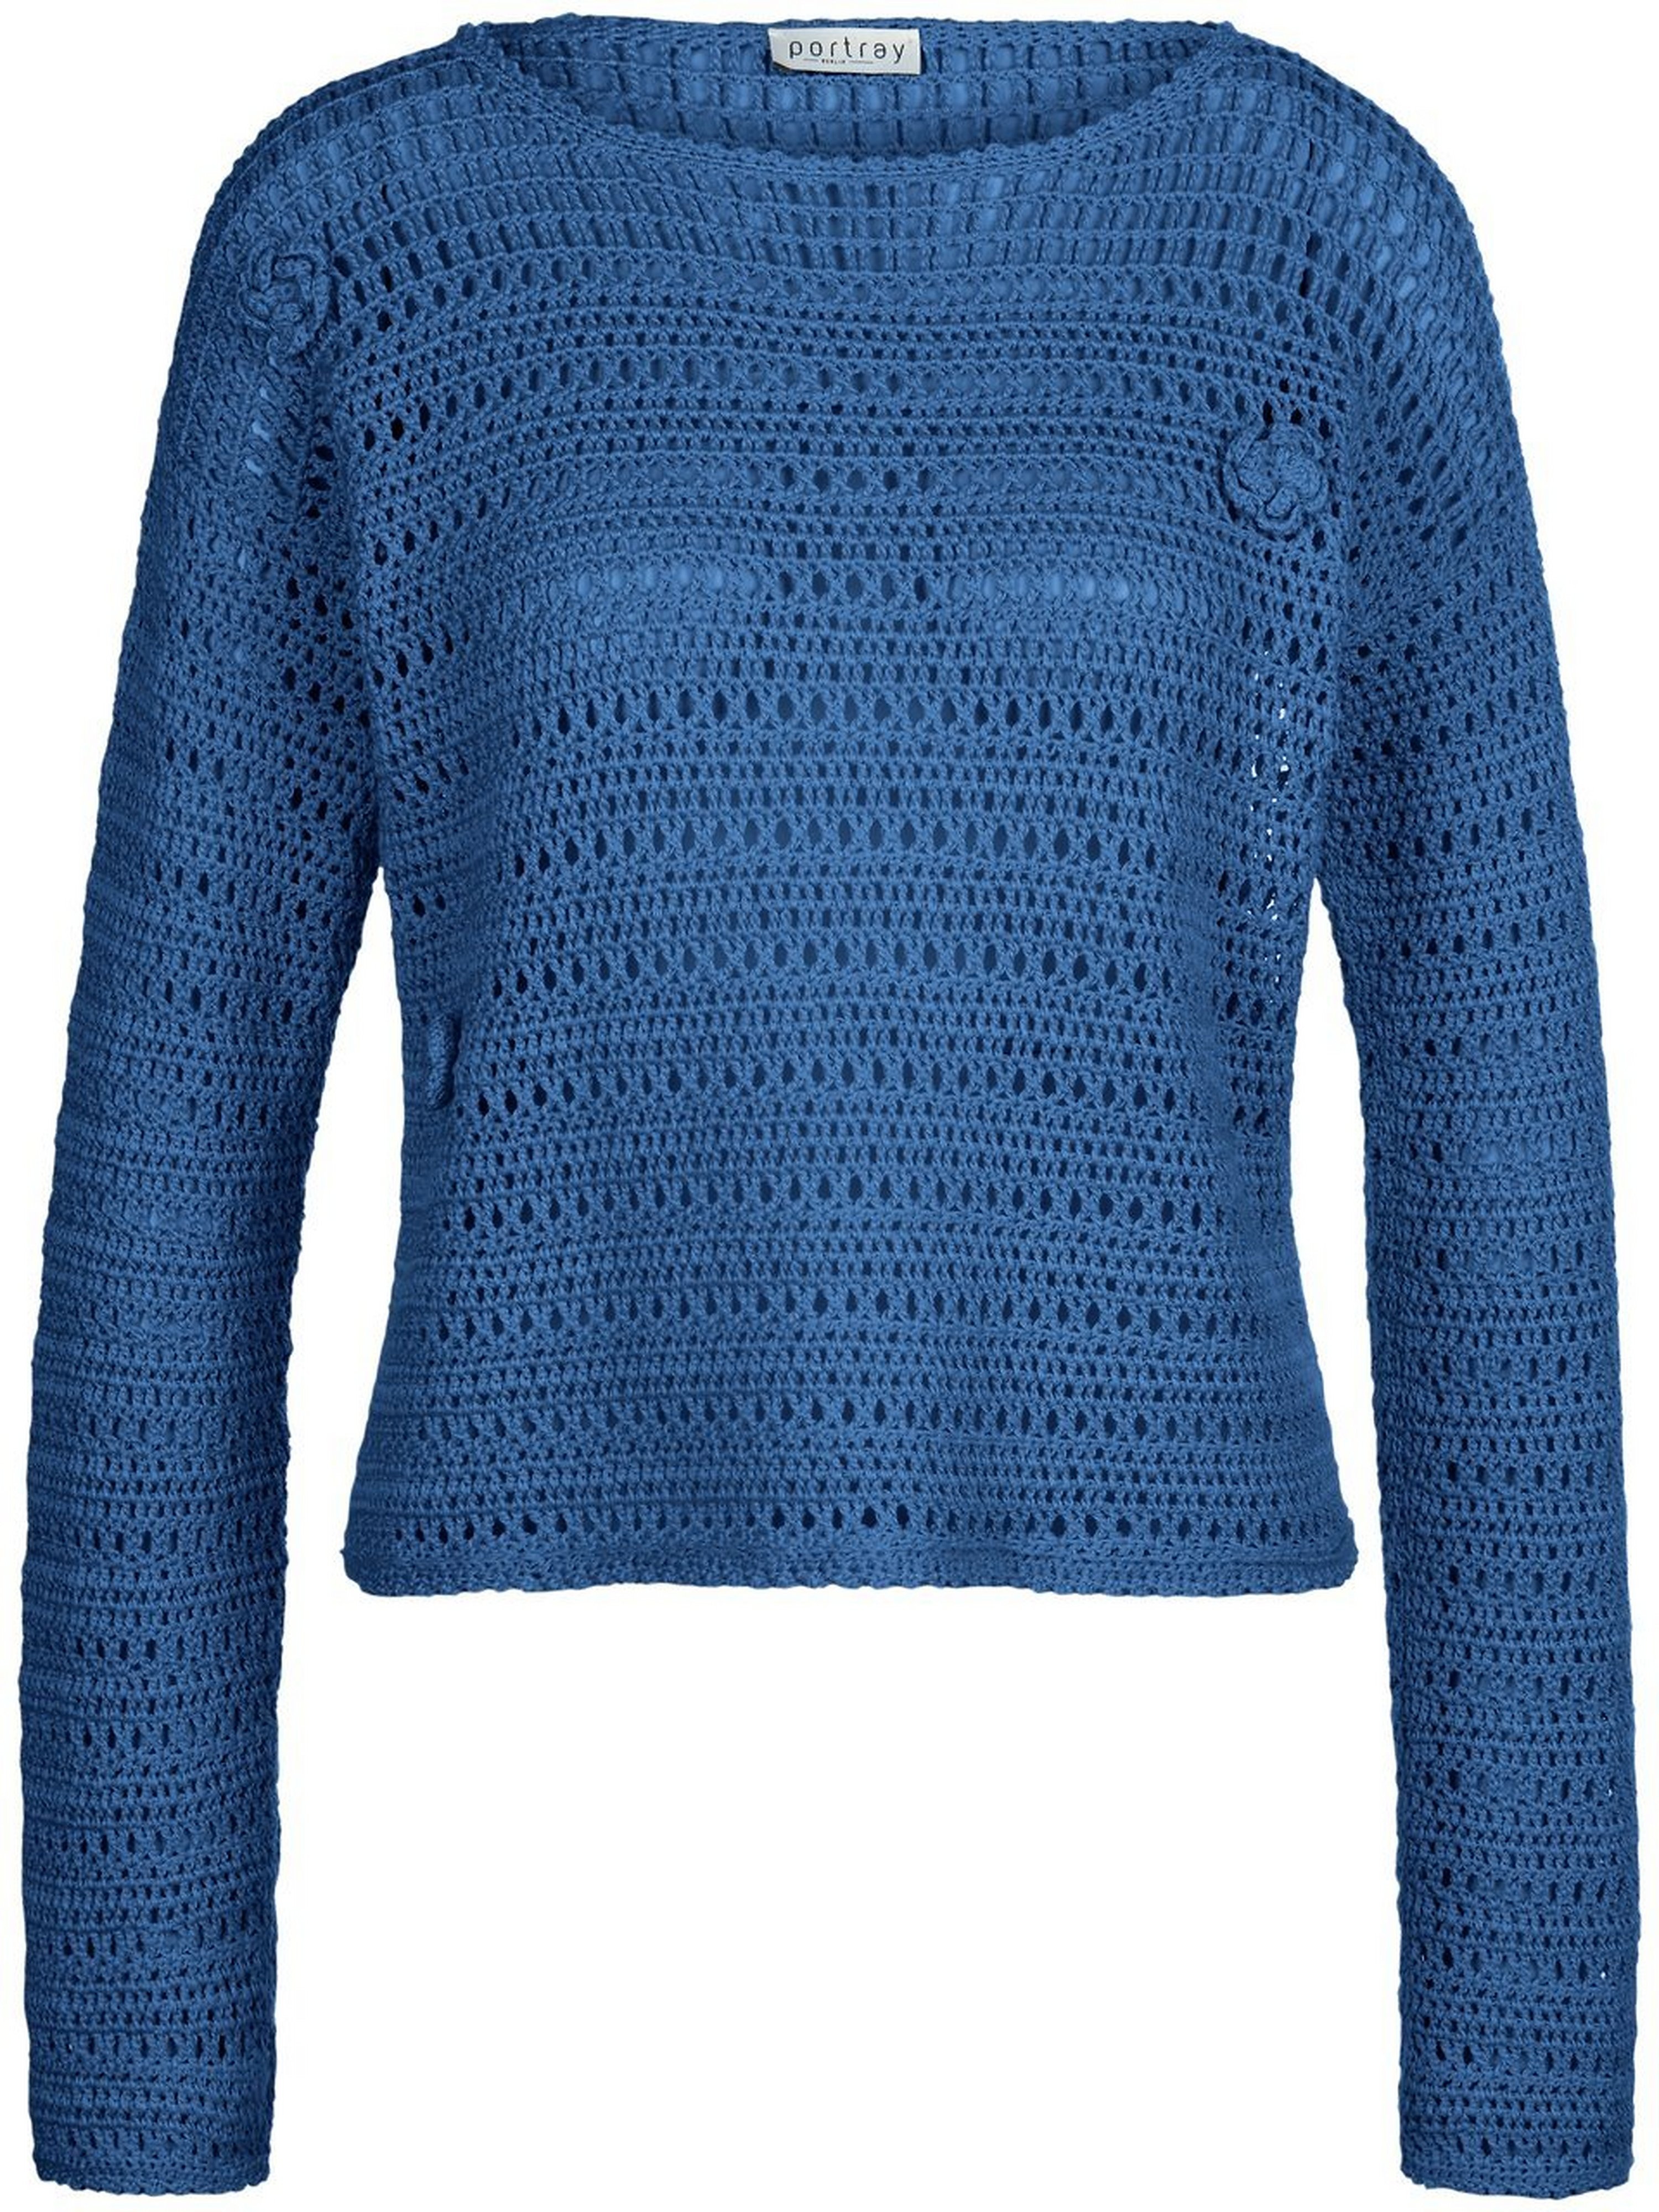 Le pull 100% coton  portray berlin bleu